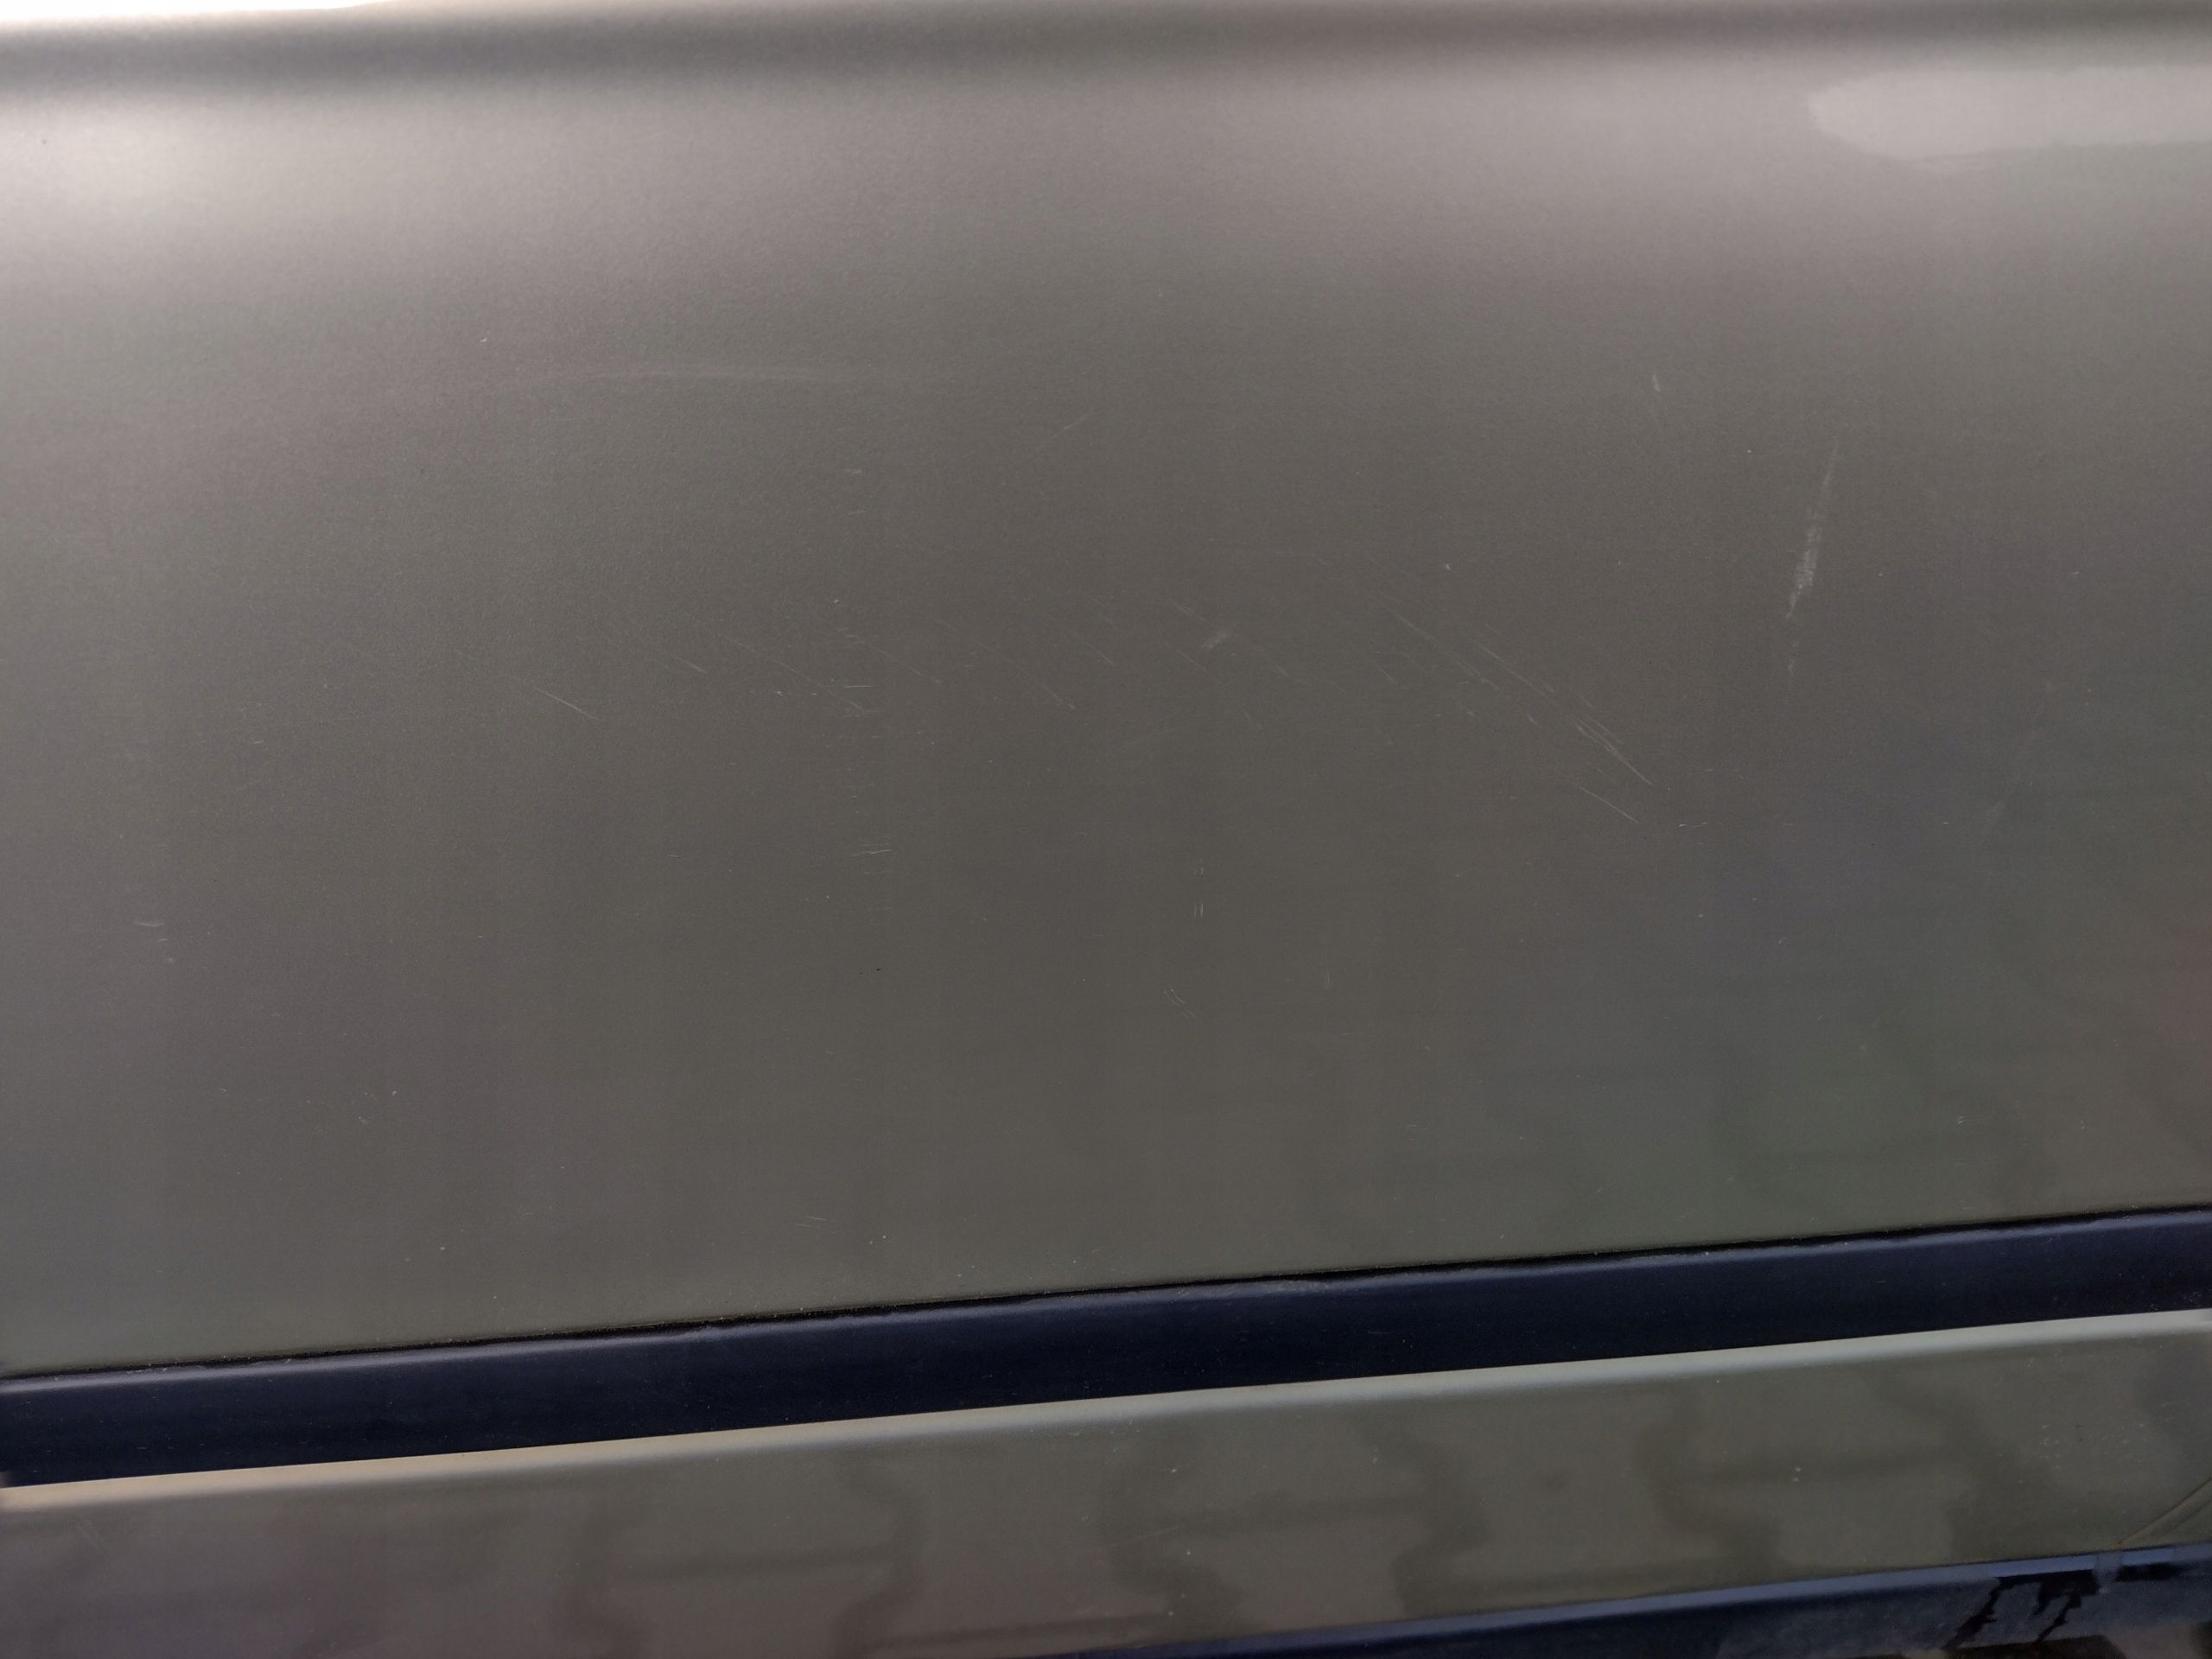 Drzwi prawy tył Honda Civic Vi sedan 5d k: Yr-523m